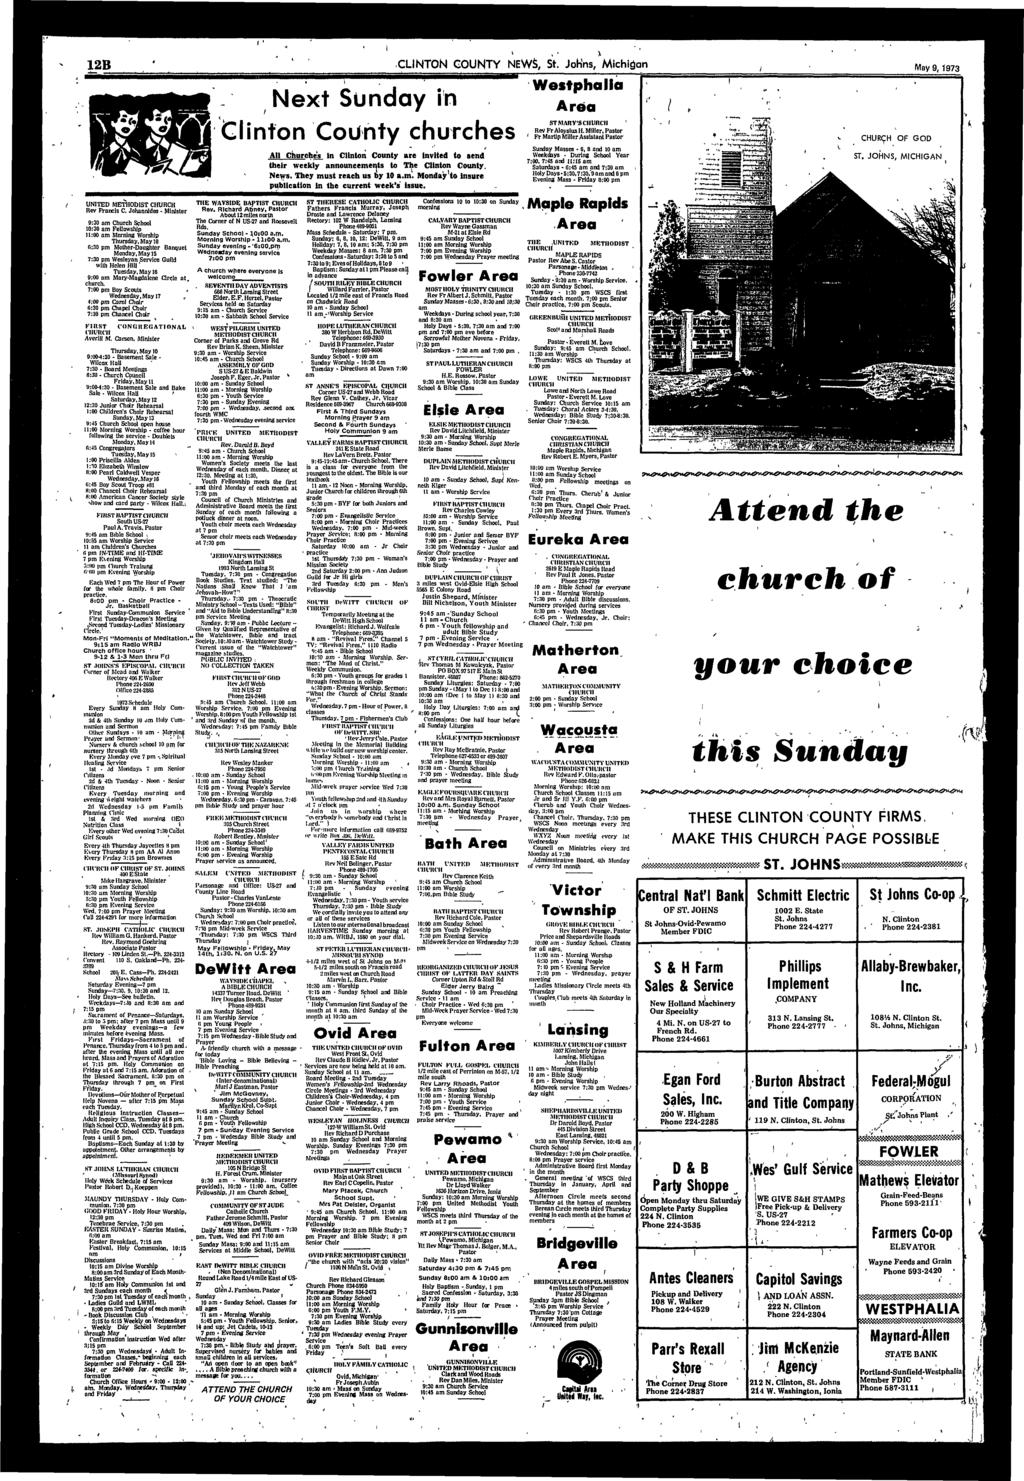 12B CLNTON COUNTY NEWS, St. Johns, Mchgan Mav 9, 1973 UNTED METHODST CHURCH Rev Francs C.